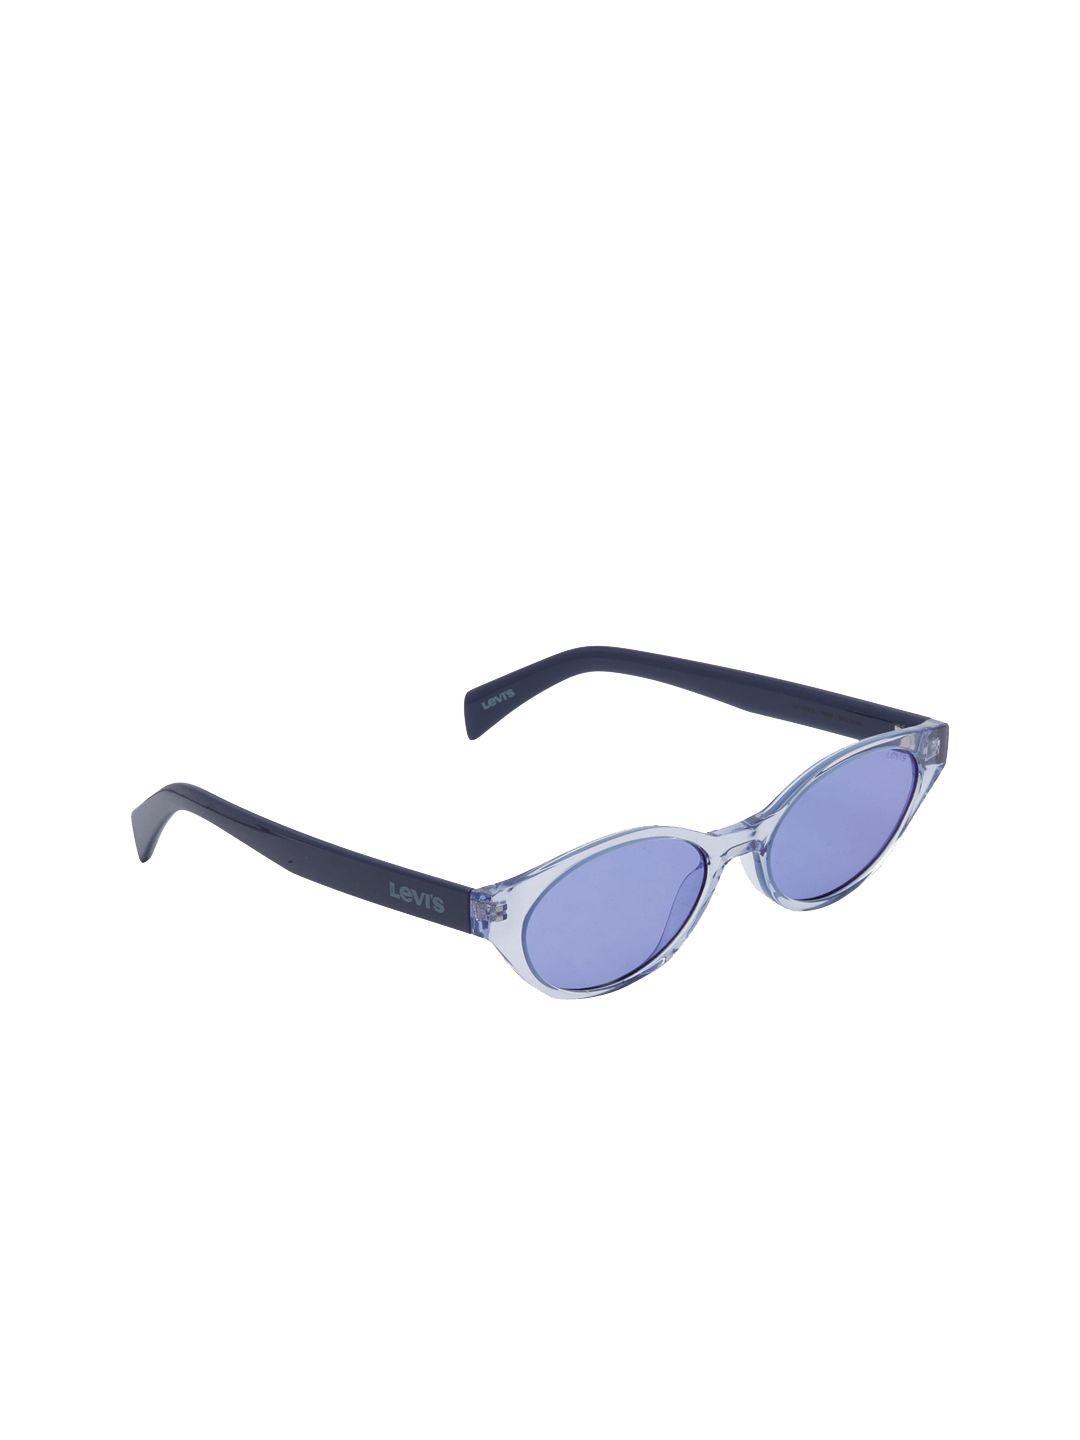 levis-women-blue-cateye-uv-protected-sunglasses-lv-1003/s-789-5435